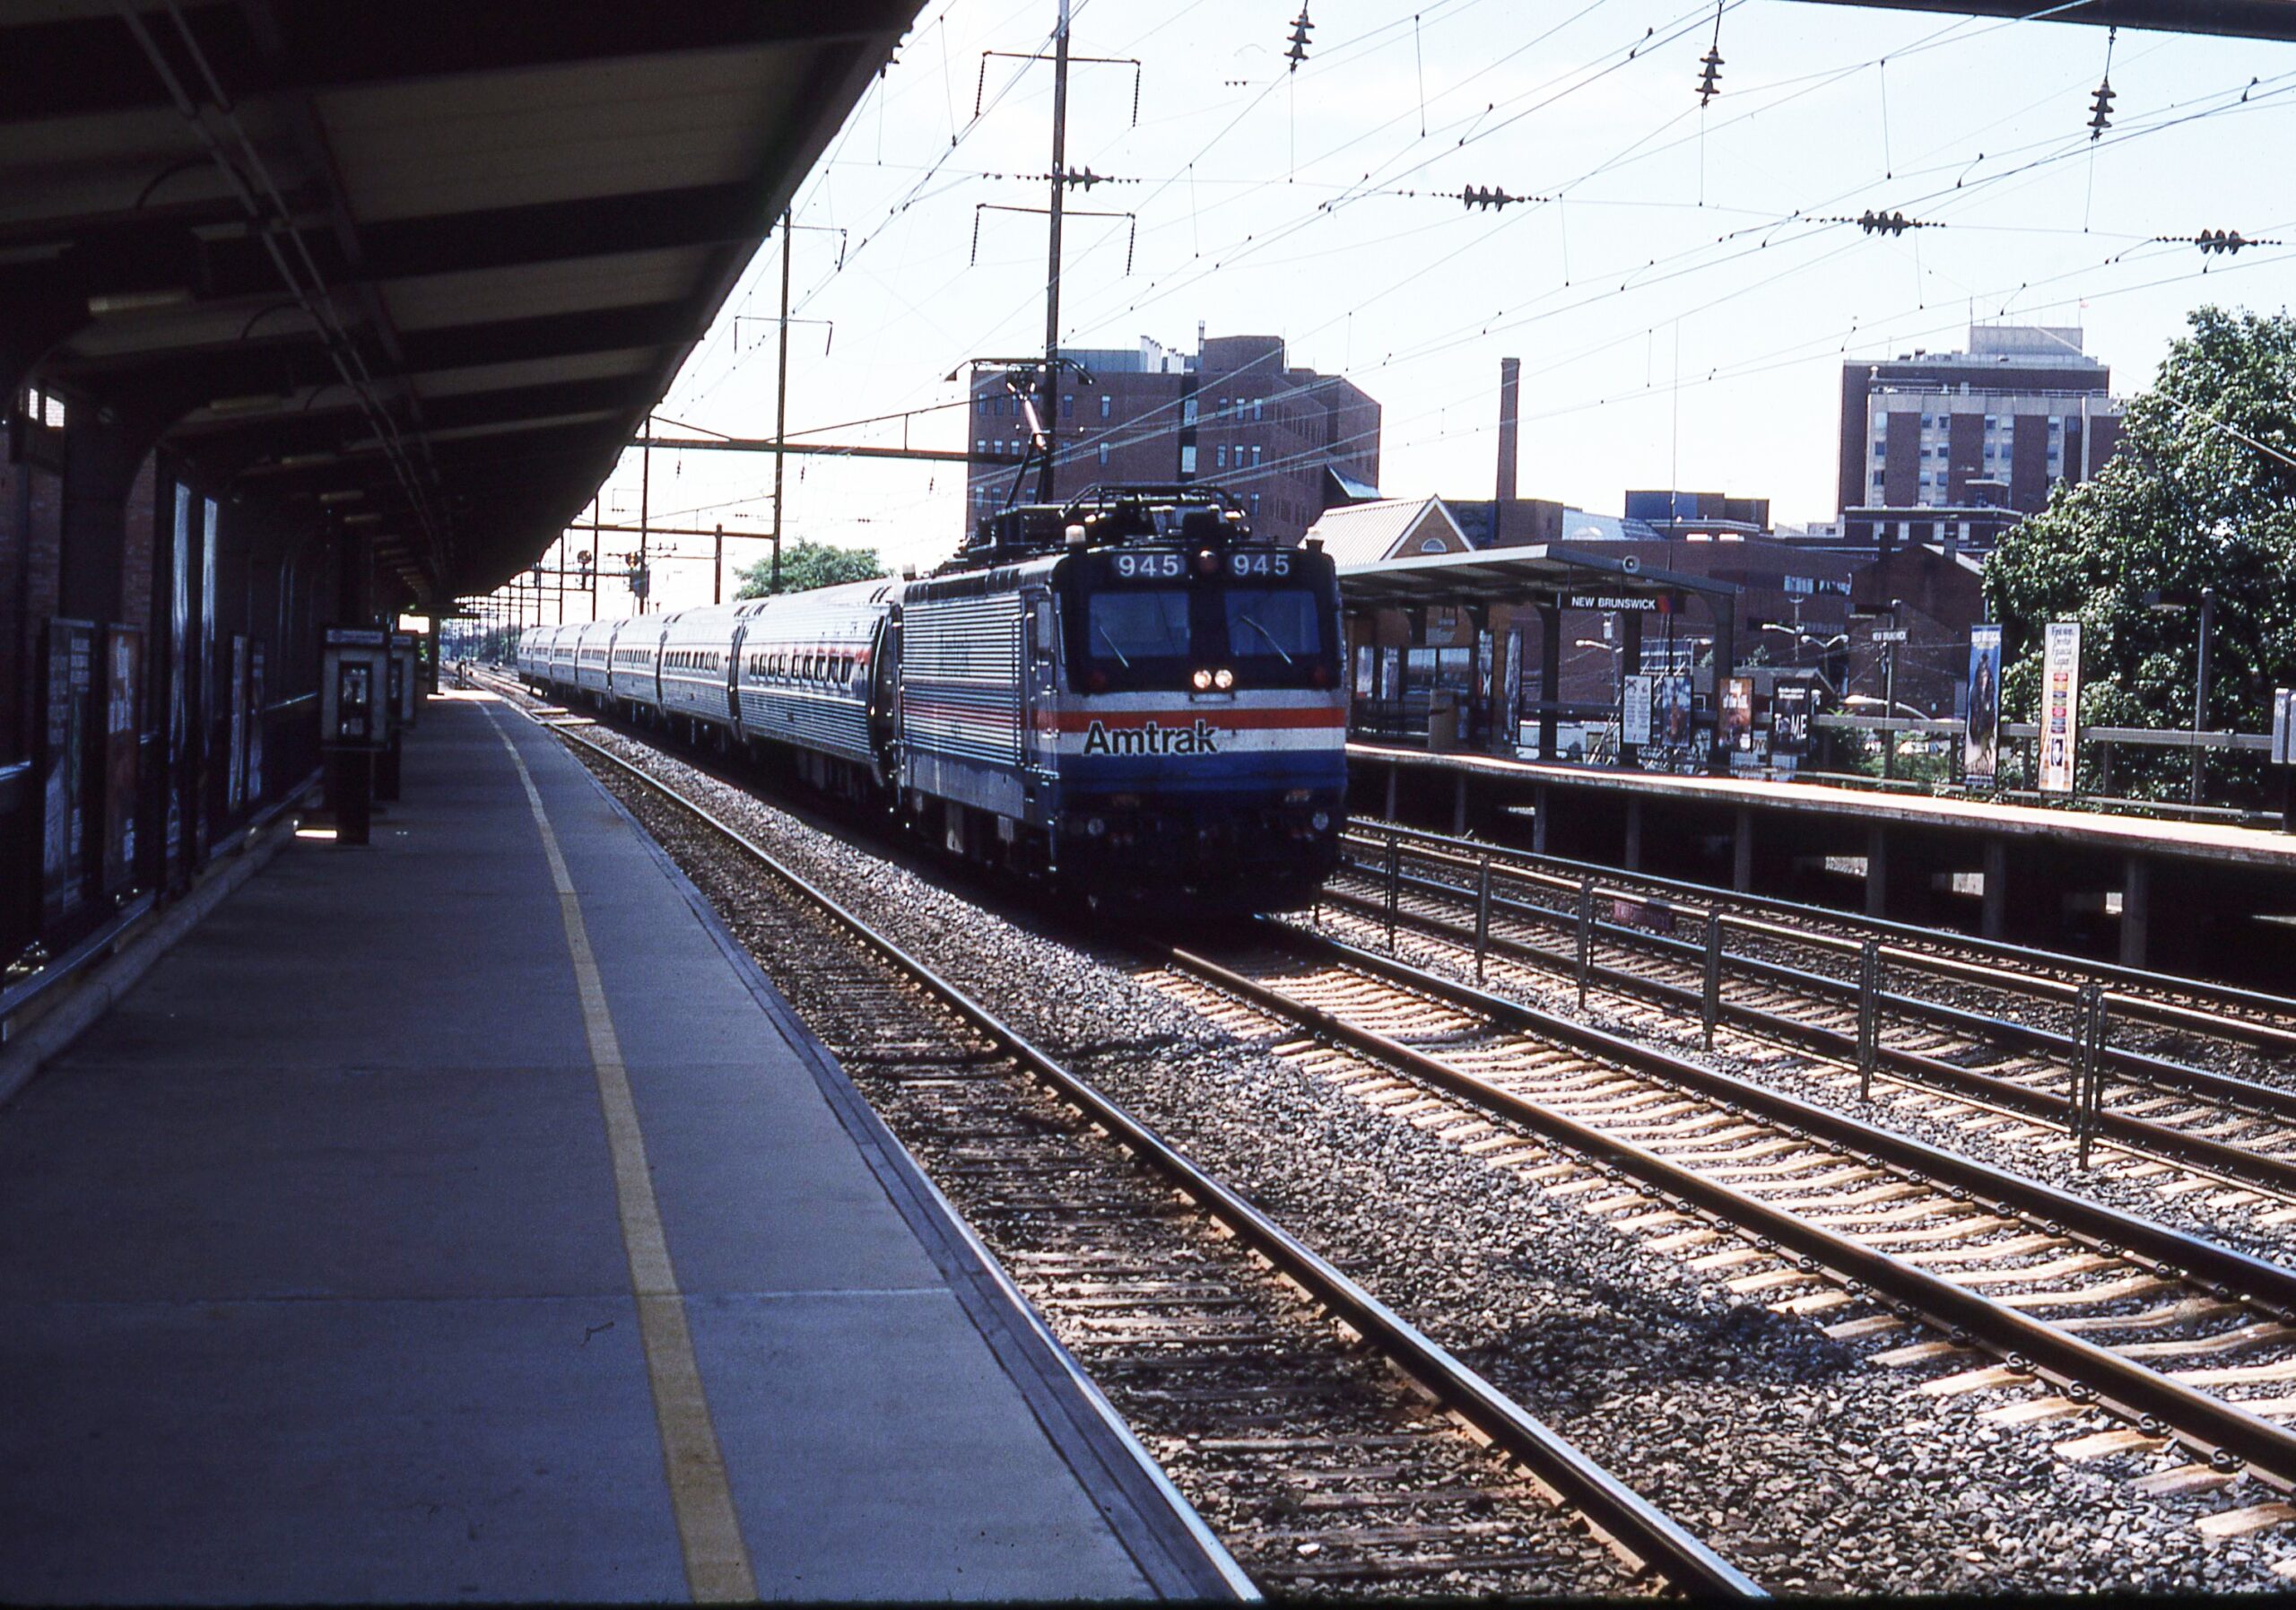 Amtrak | New Brunswick, New Jersey | EMD AEM-7 #945 electric motor | Train #140 | eastbound passenger train | New Brunswick, N.J. station | August 26, 1984 | Richard Prince photograph